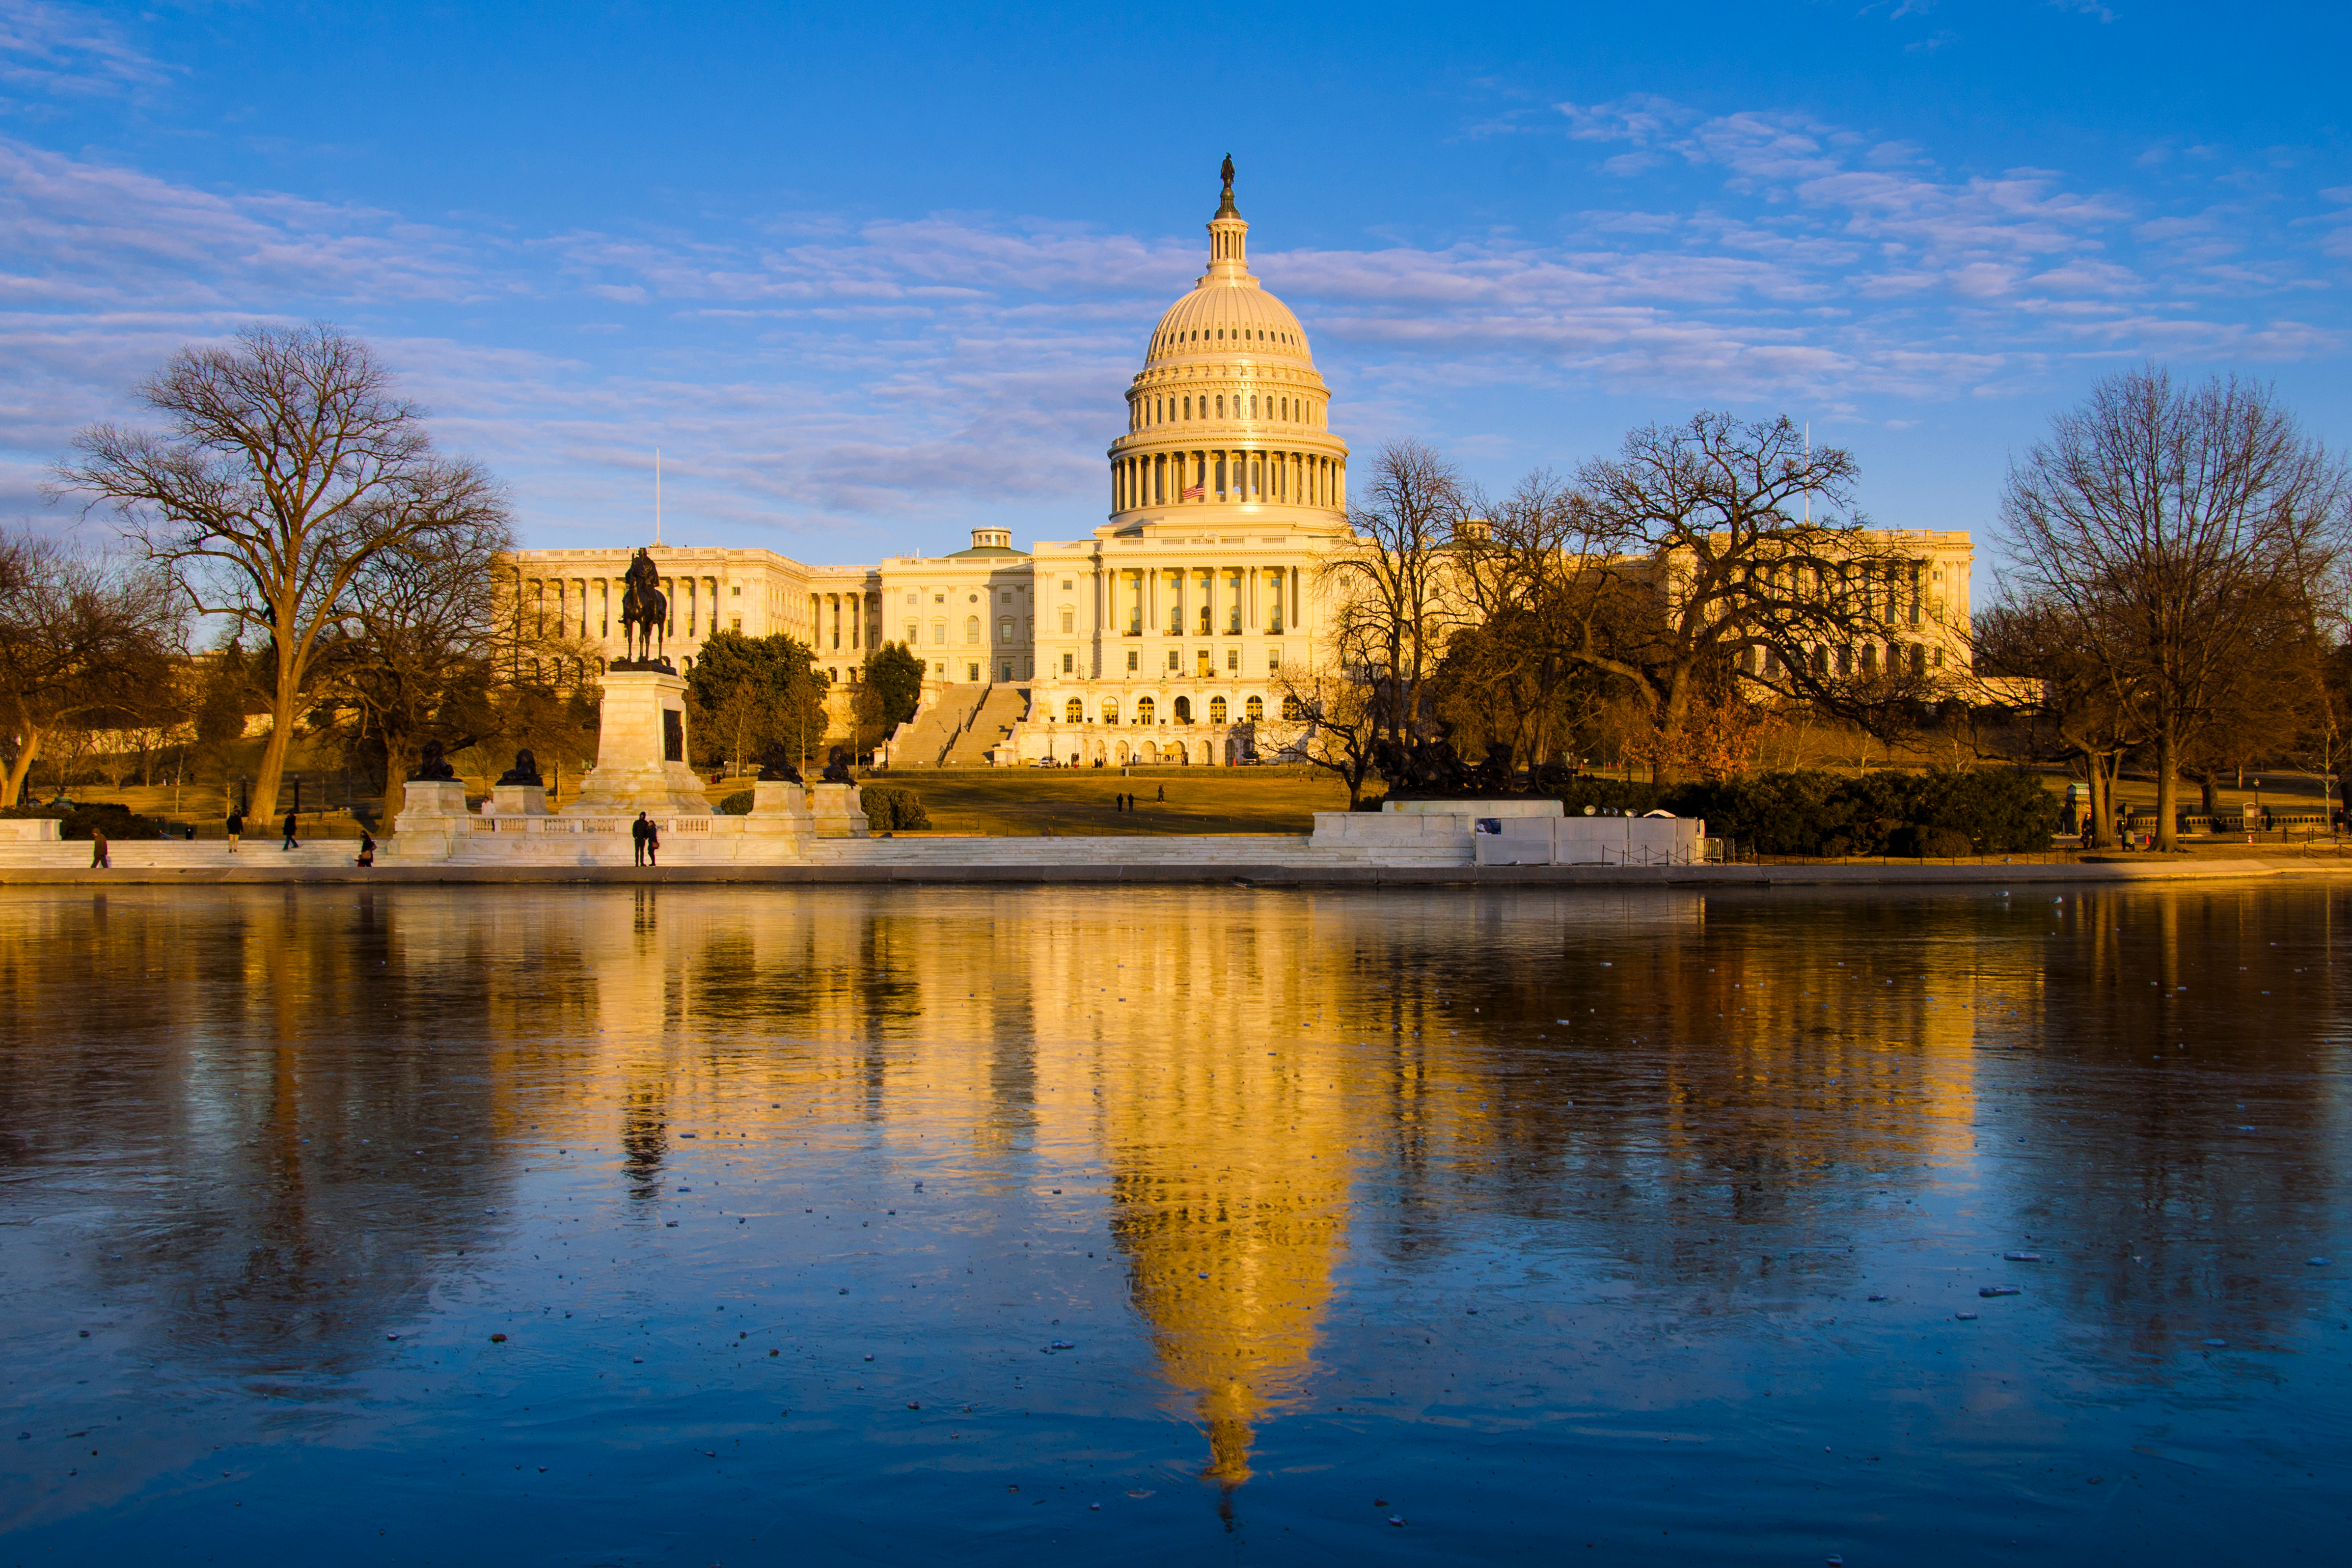 Unites States Capitol at sunset - Image